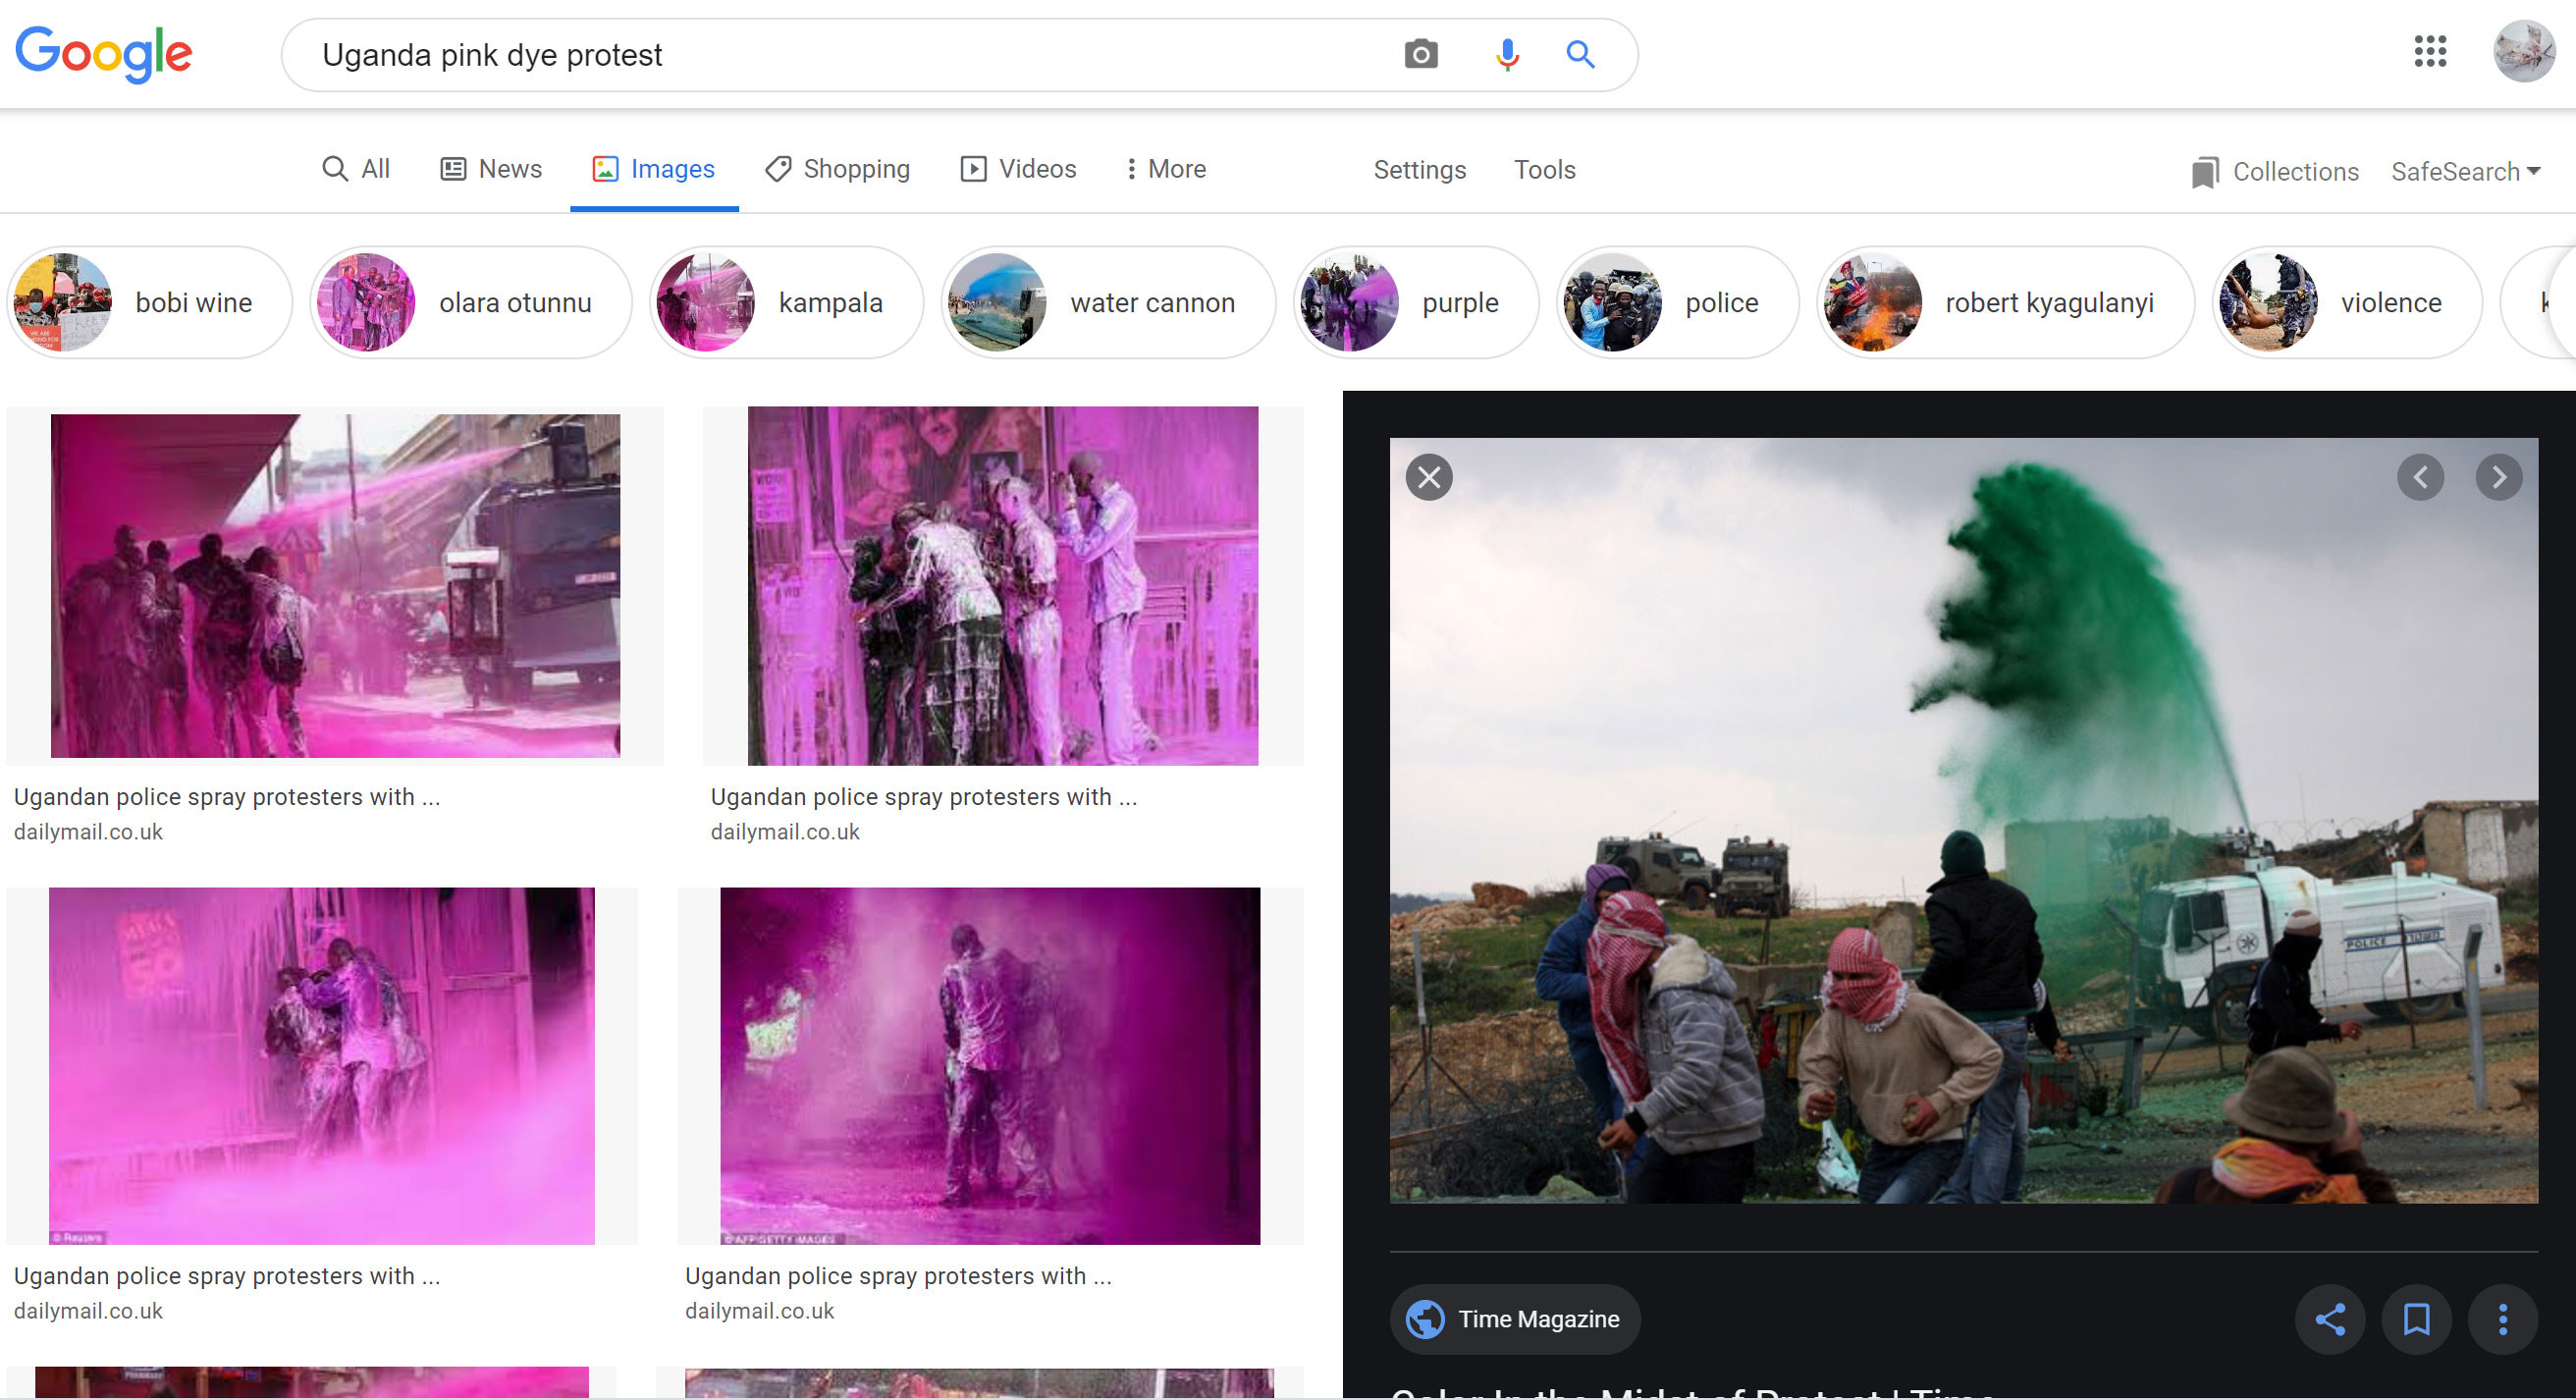 Google image search of “Uganda pink dye protest”